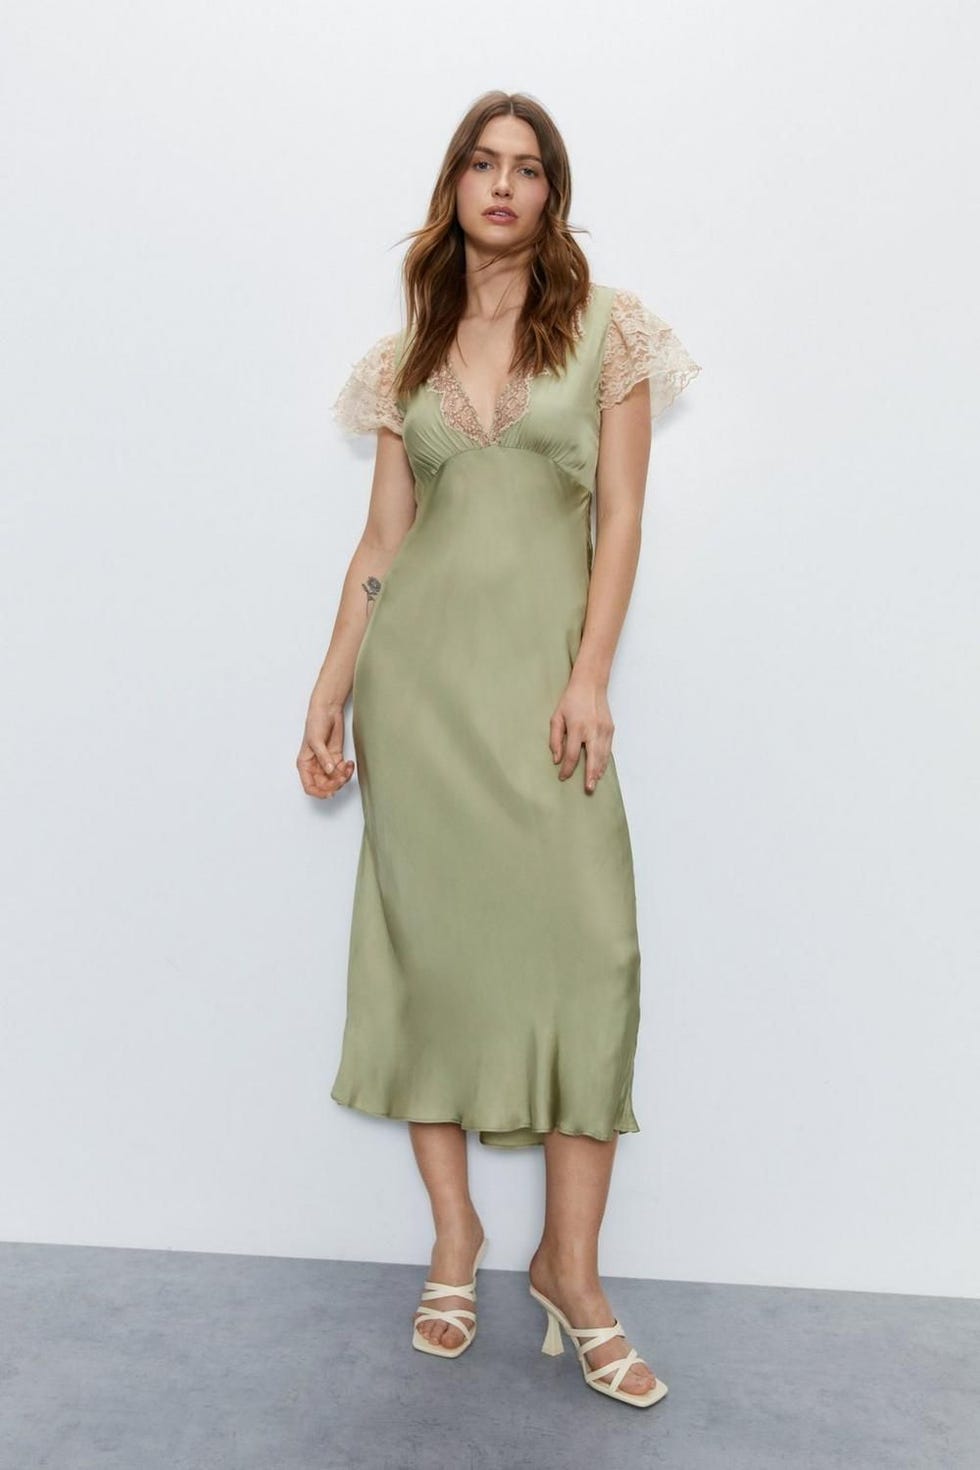 H&M Lace-detail Satin Slip Dress